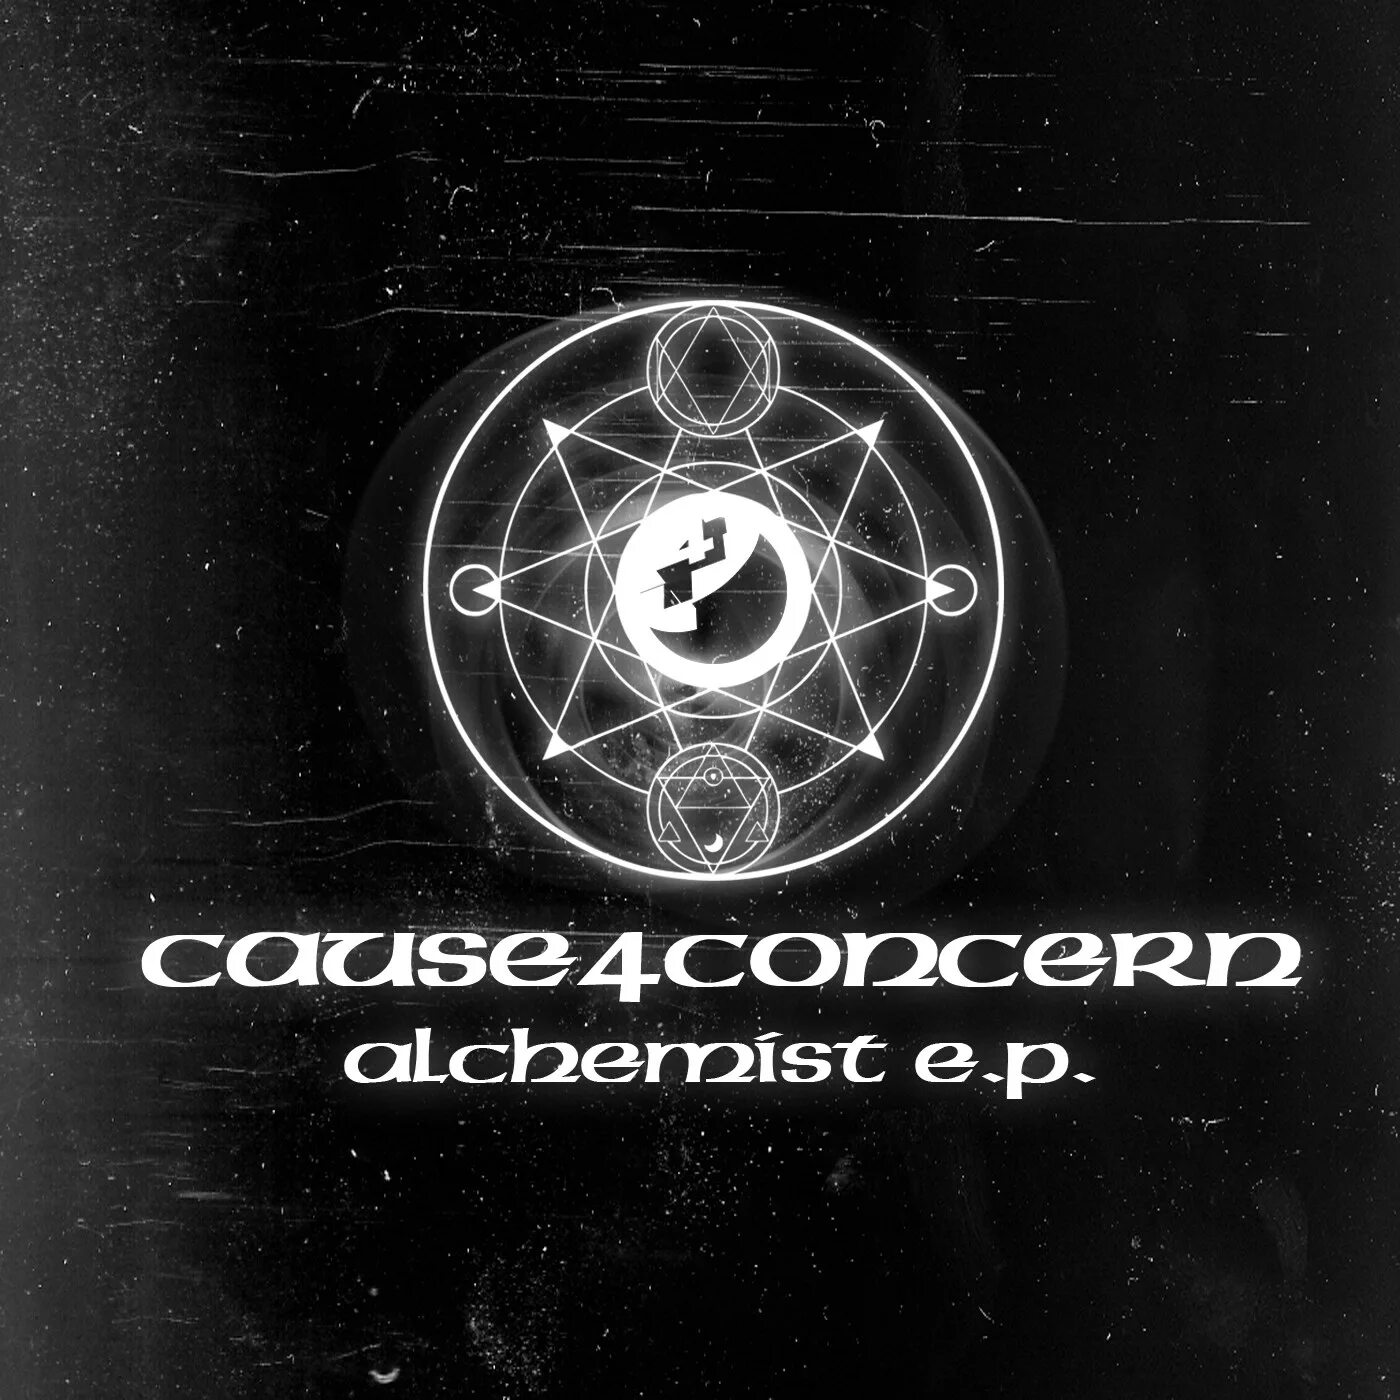 Cause concern. Cause4concern* – Alchemist Ep. Cause 4 concern. Cause 4 concern Sticker.